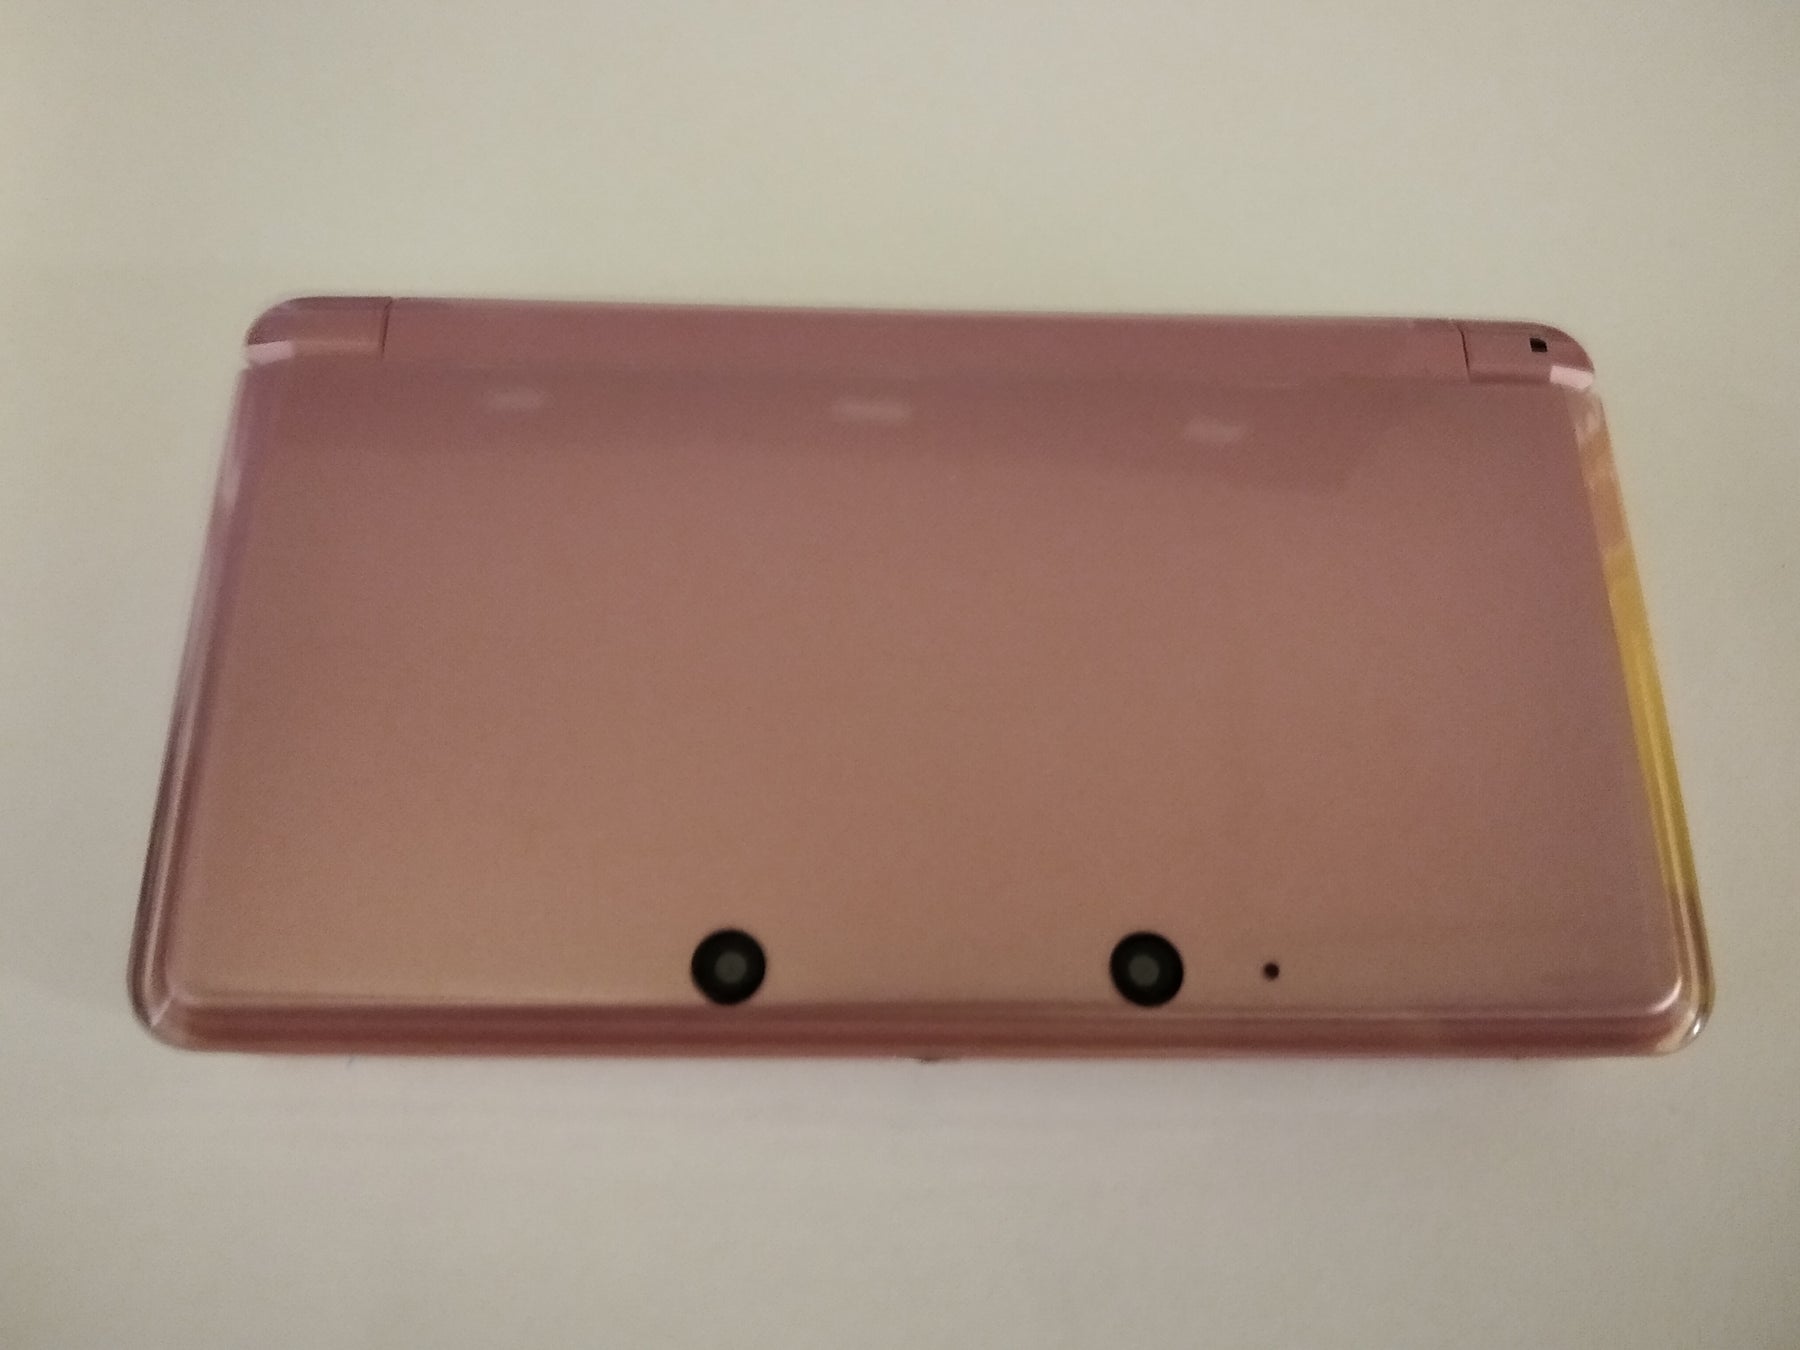 Nintendo 3DS Konsole coral pink [Gut]